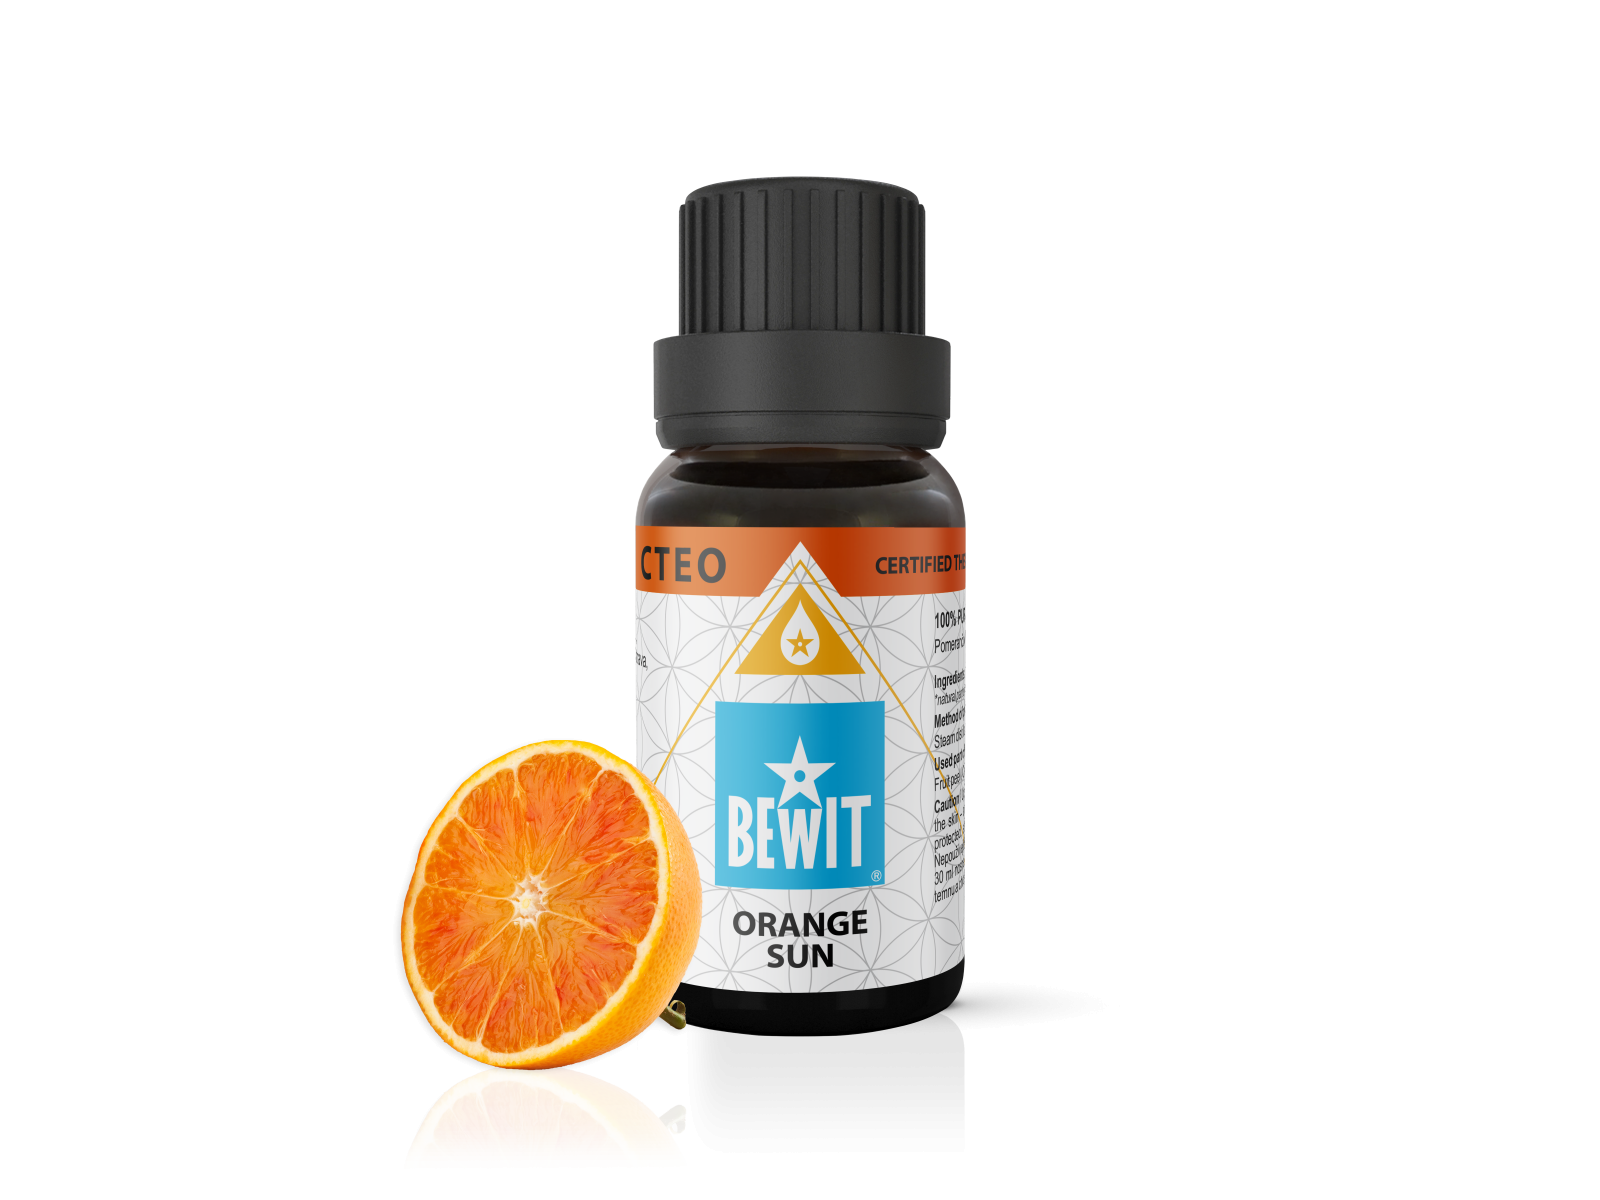 BEWIT Orange SUN - 100% pure and natural CTEO® essential oil